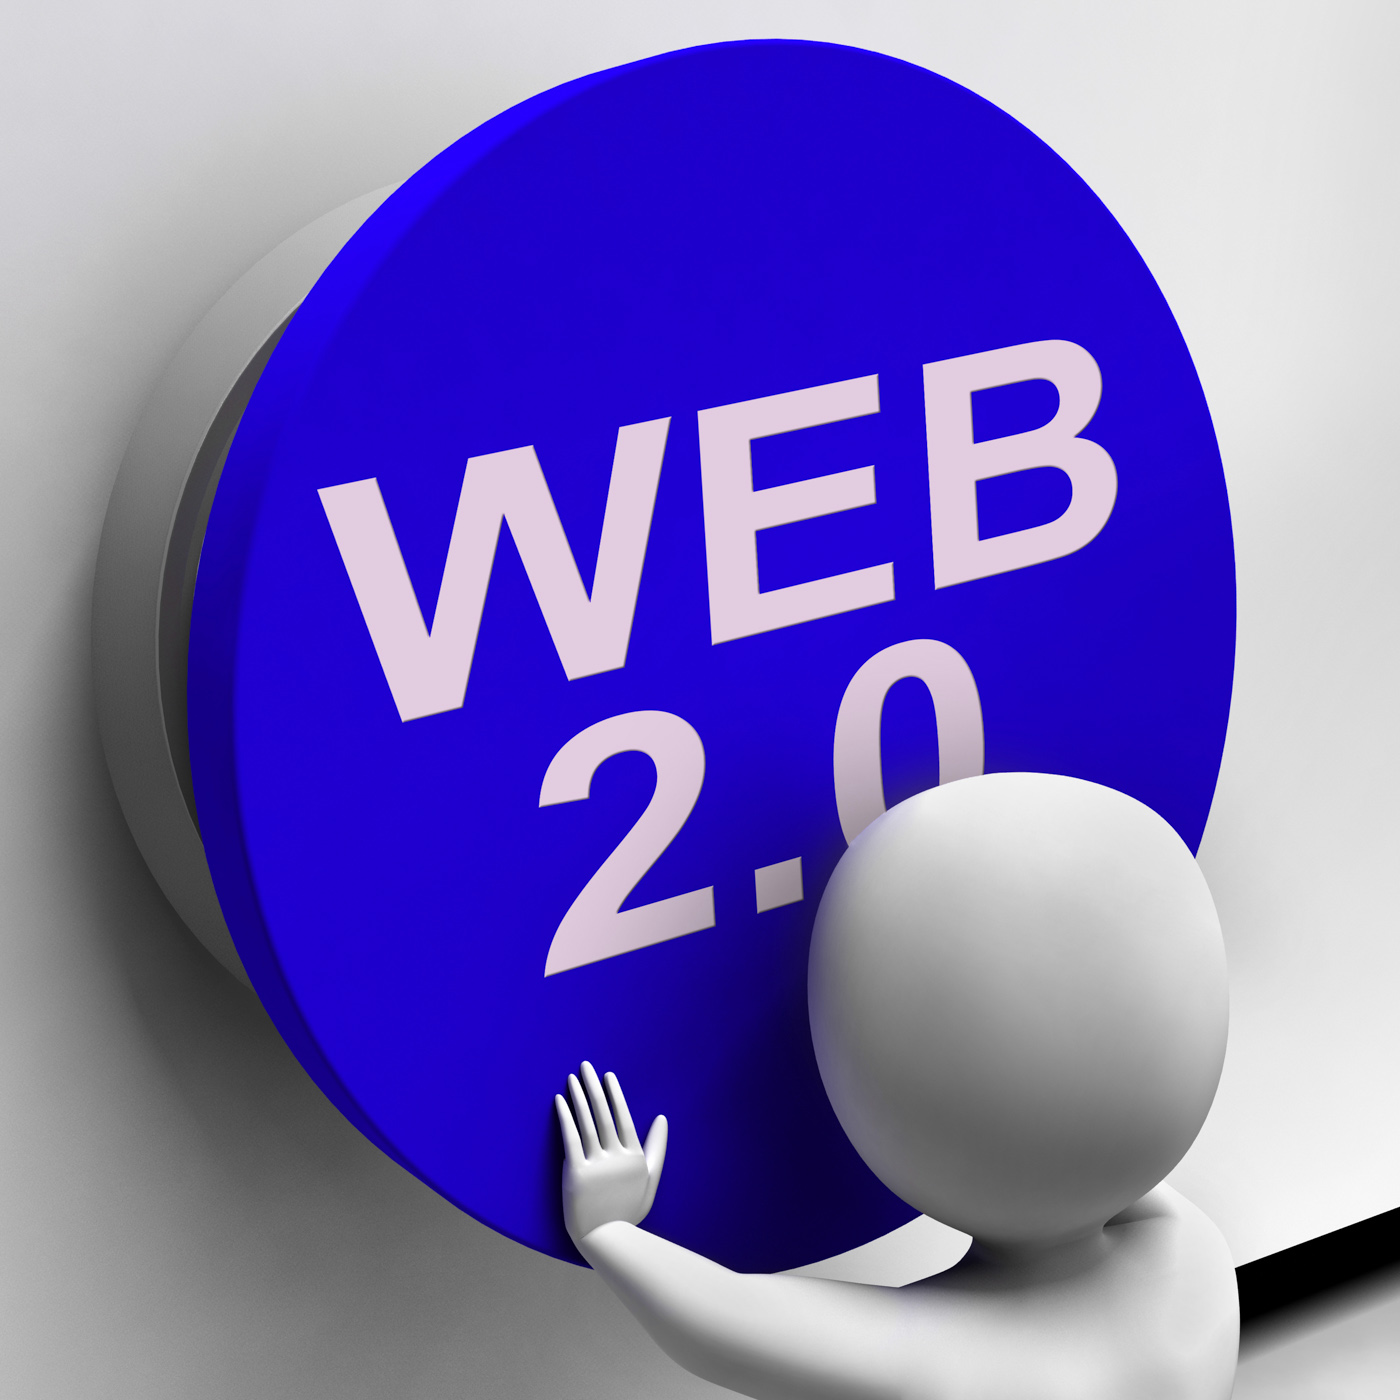 Web 20 Button Shows User-Generated Website Platform, 20, Button, Computer, Content, HQ Photo